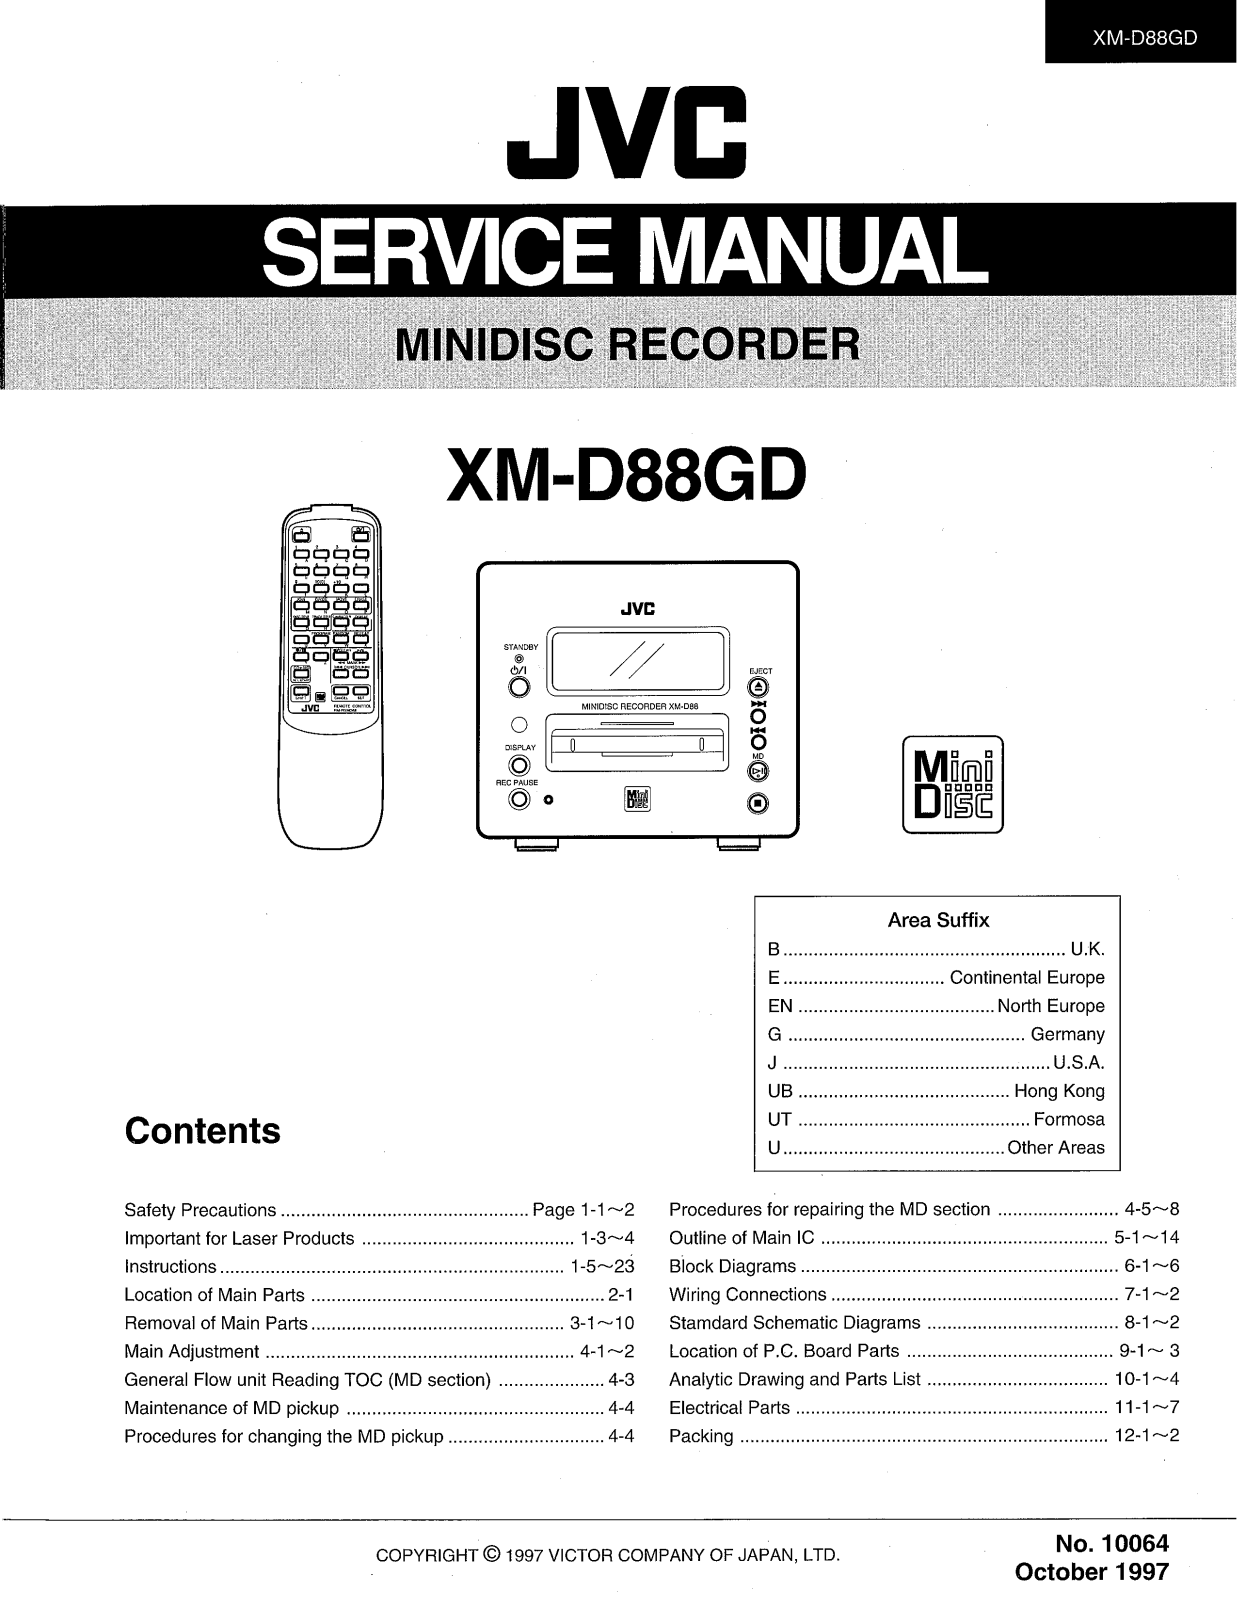 JVC XM-D88GDEN, XM-D88GDG, XM-D88GDJ, XM-D88GDU Service Manual